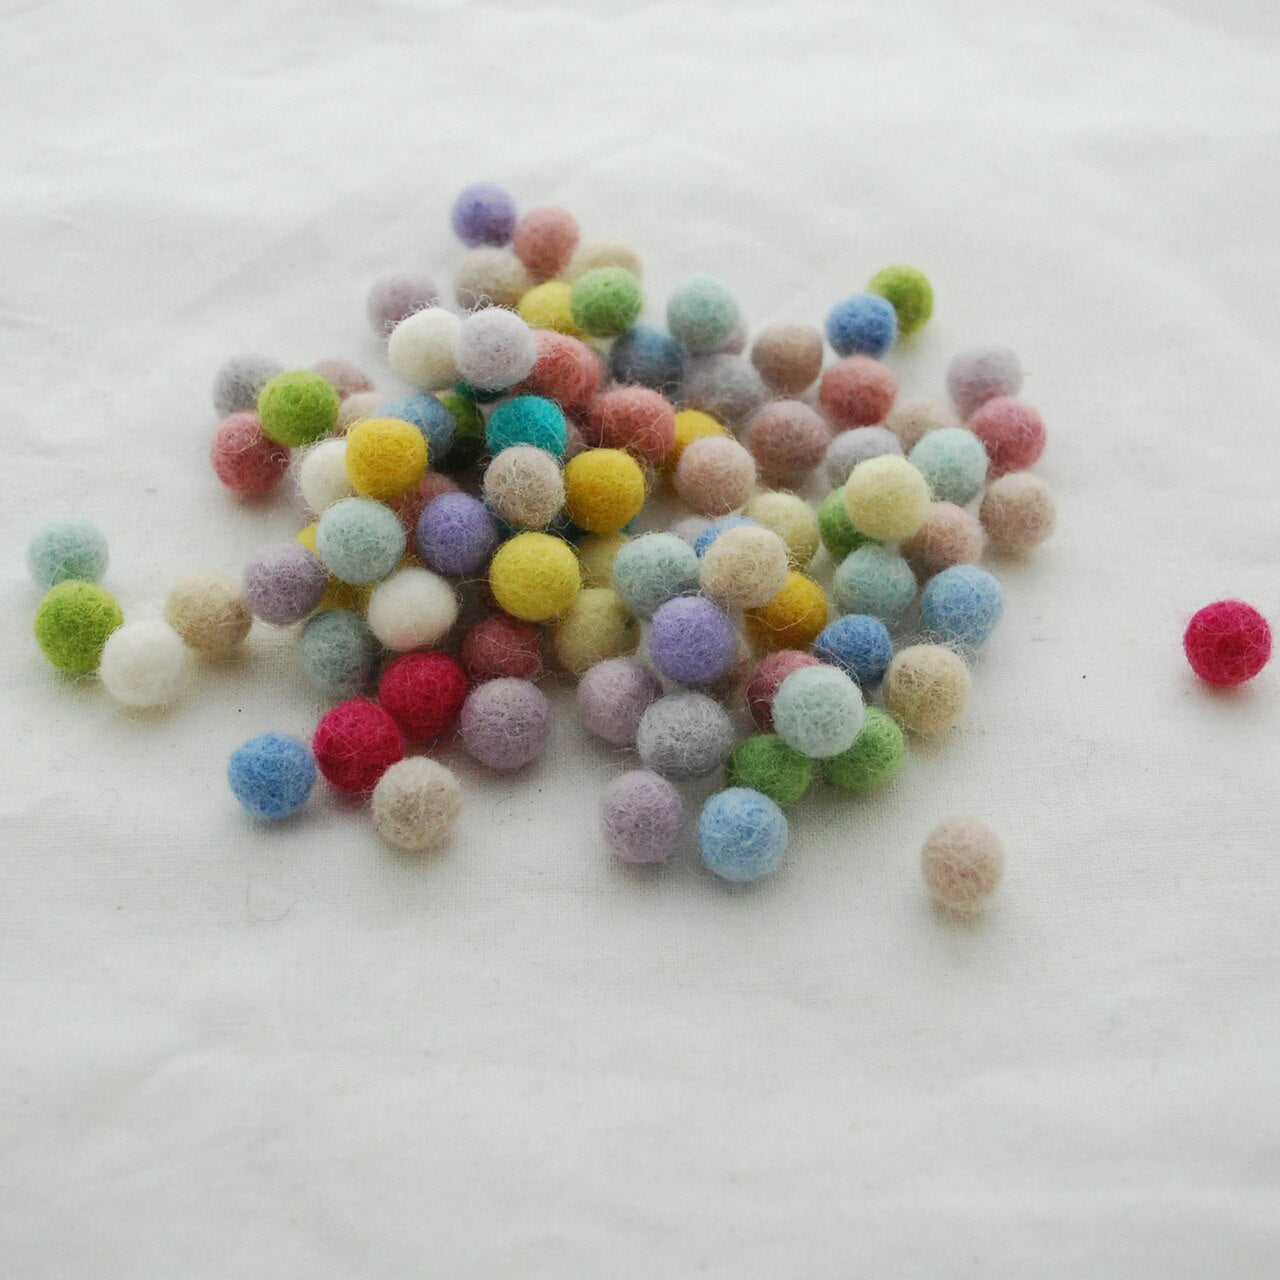 Pack of Pure Wool Felt Balls - Pastel Mix  10mm diameter